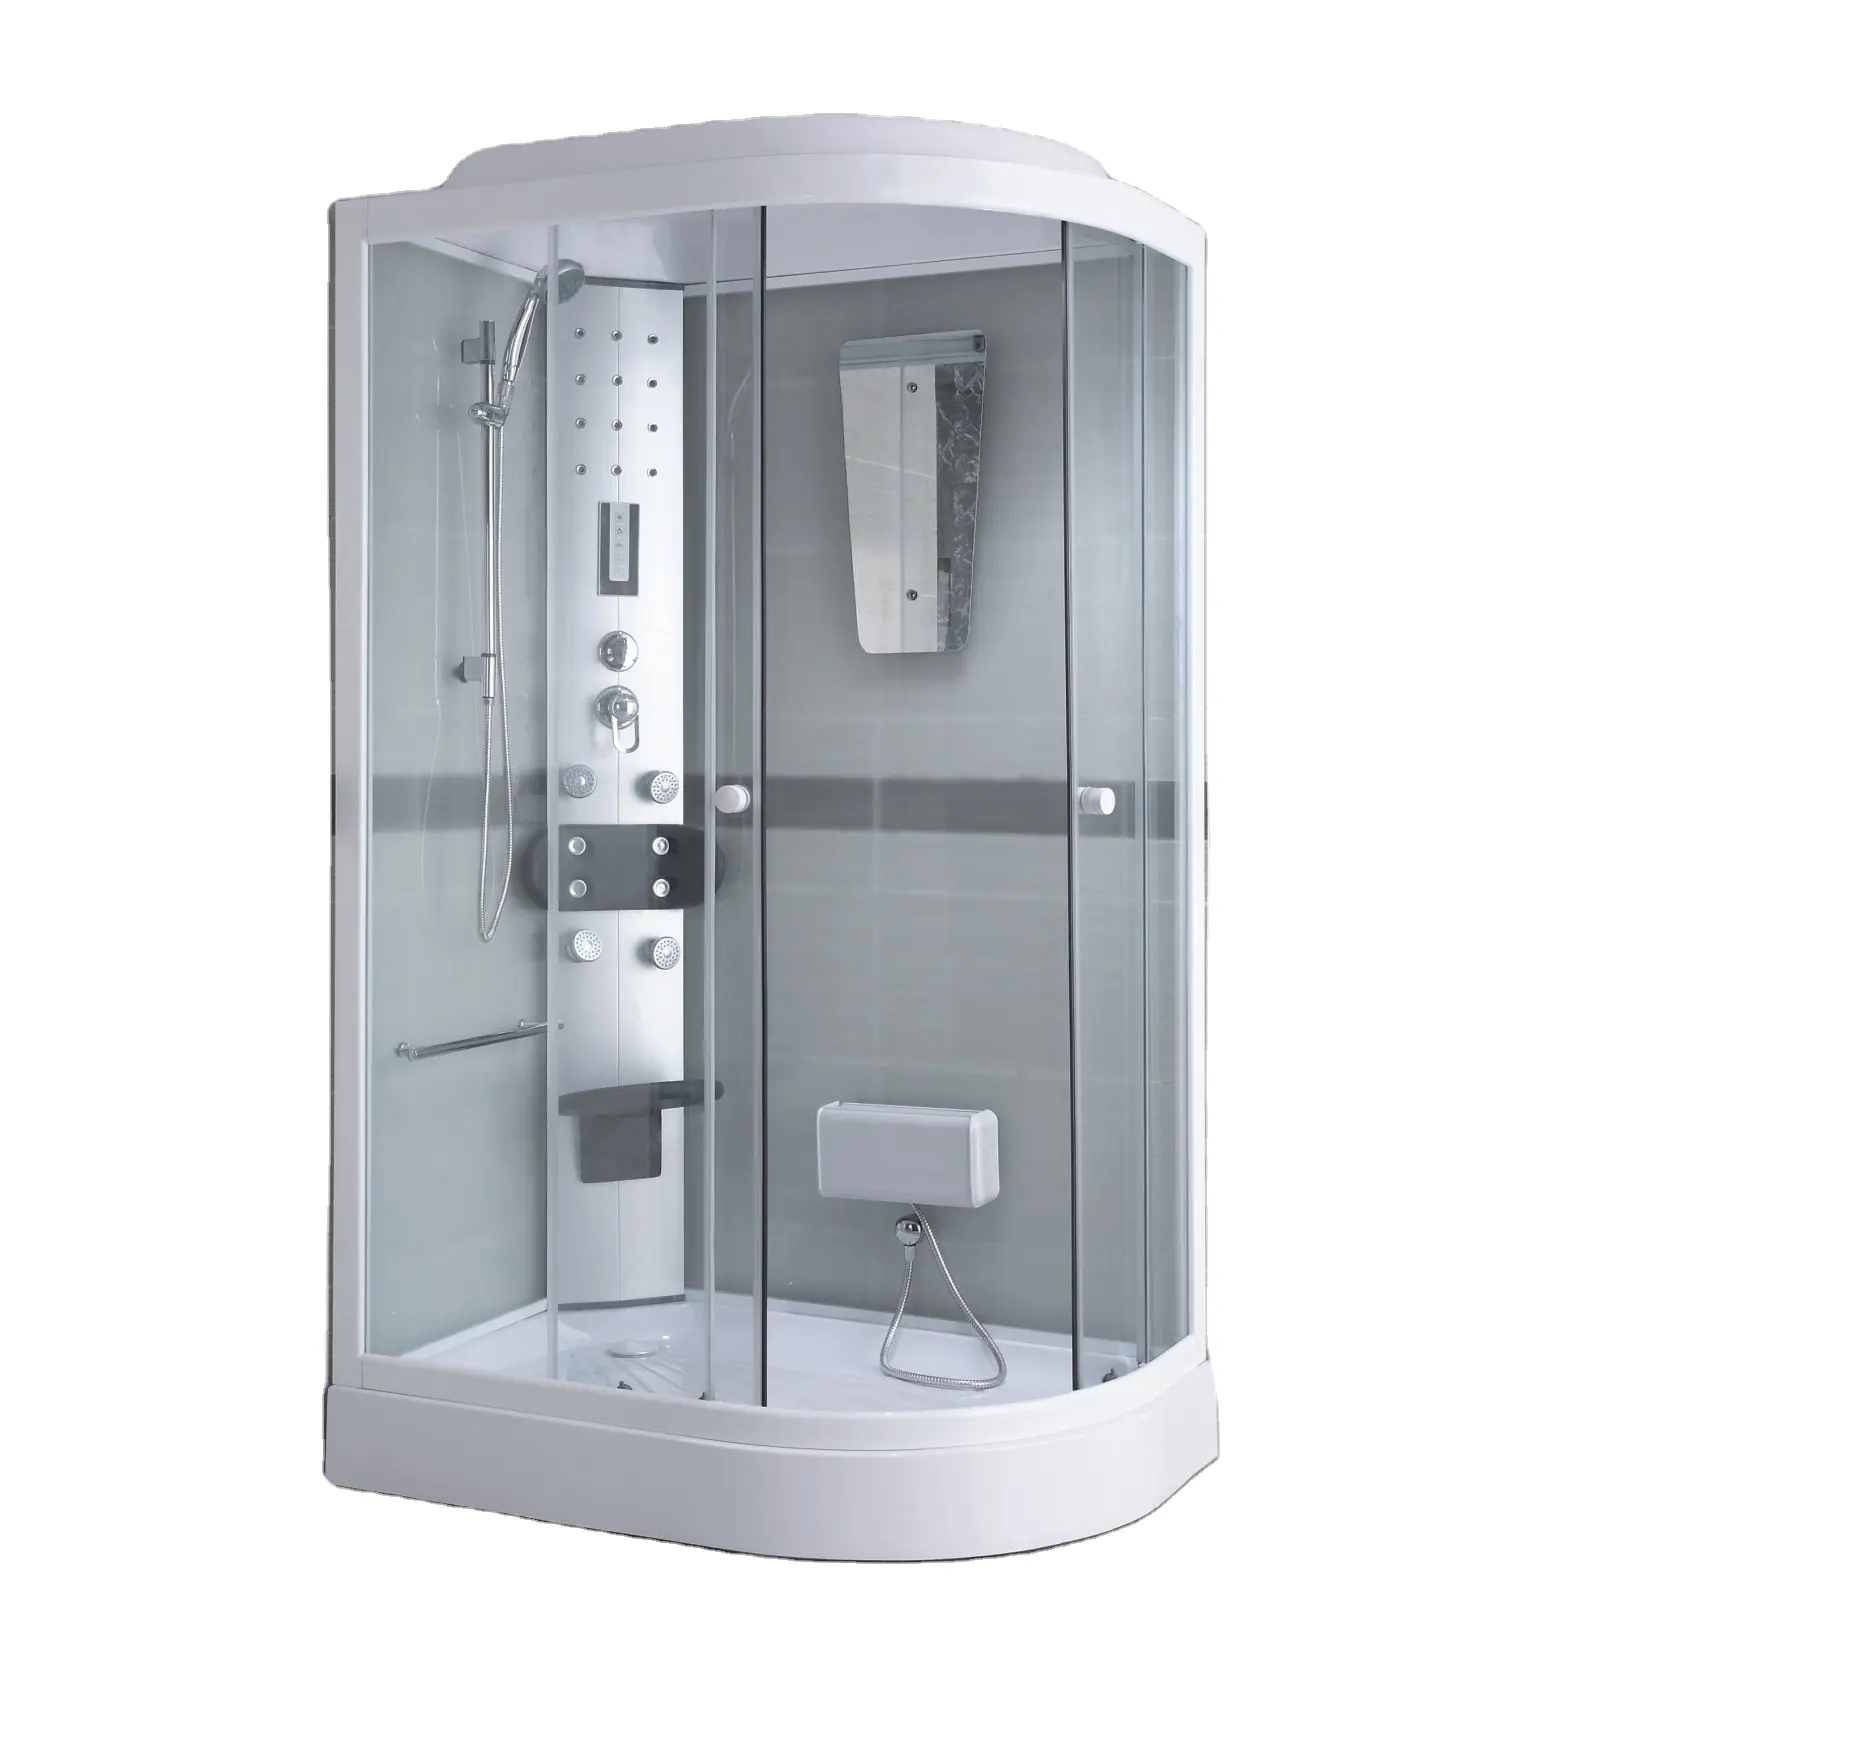 Shower room home portable sauna abs plastic enclosure bathroom remodel ideas